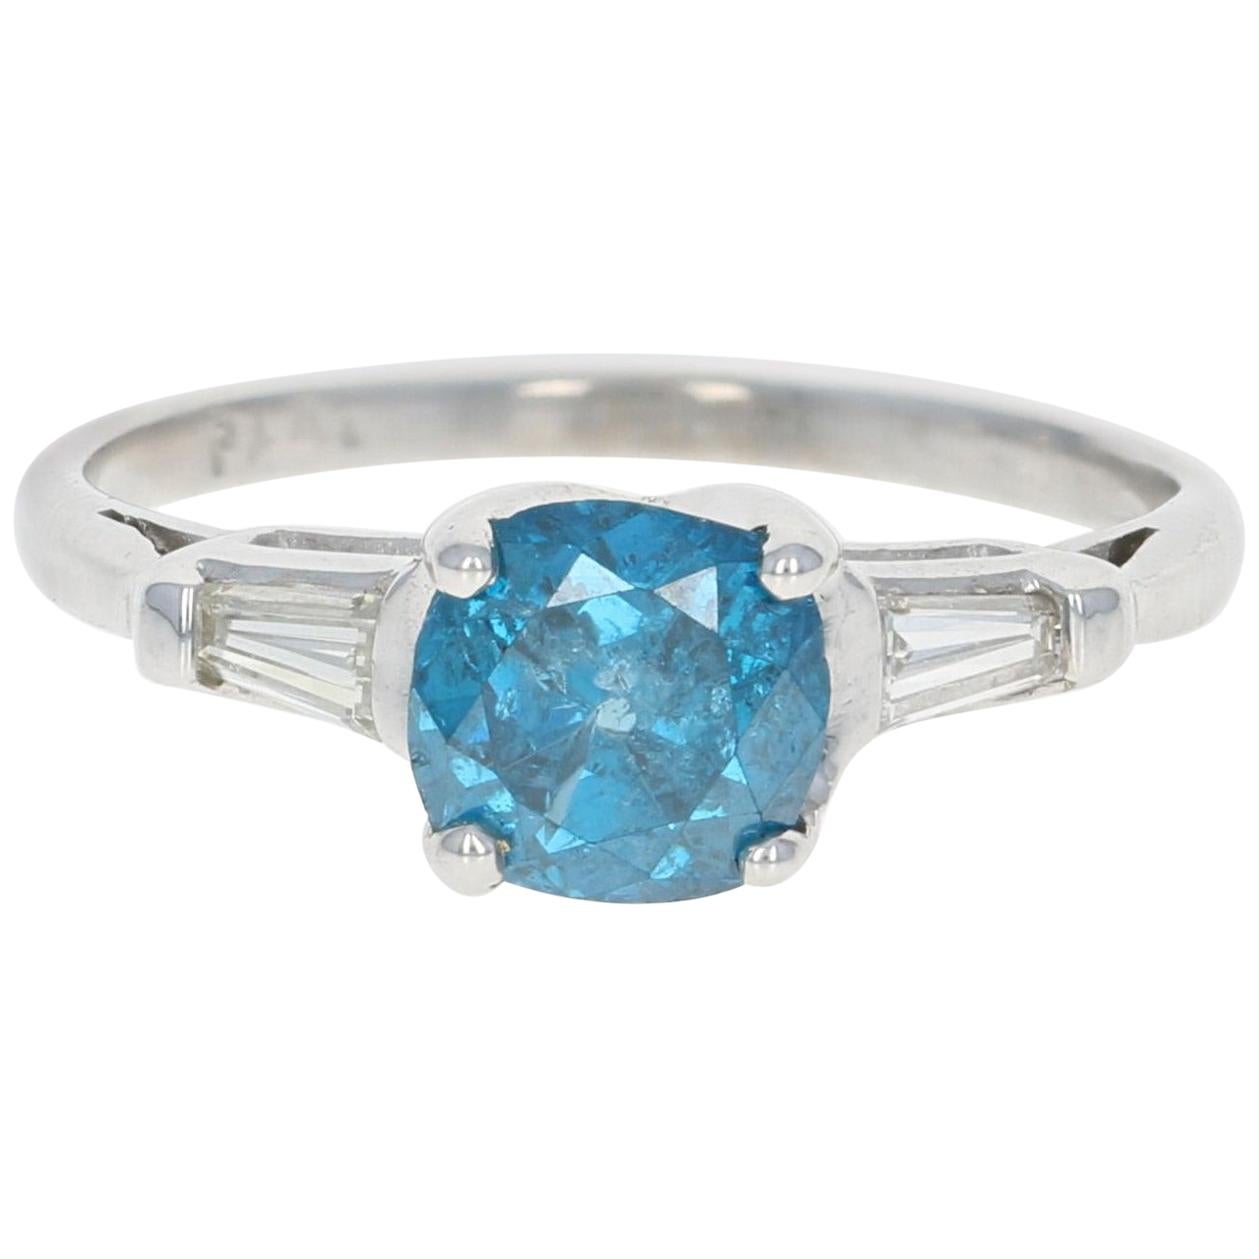 Fancy Blue and White Diamond Engagement Ring, Platinum Cushion Cut 1.45 Carat